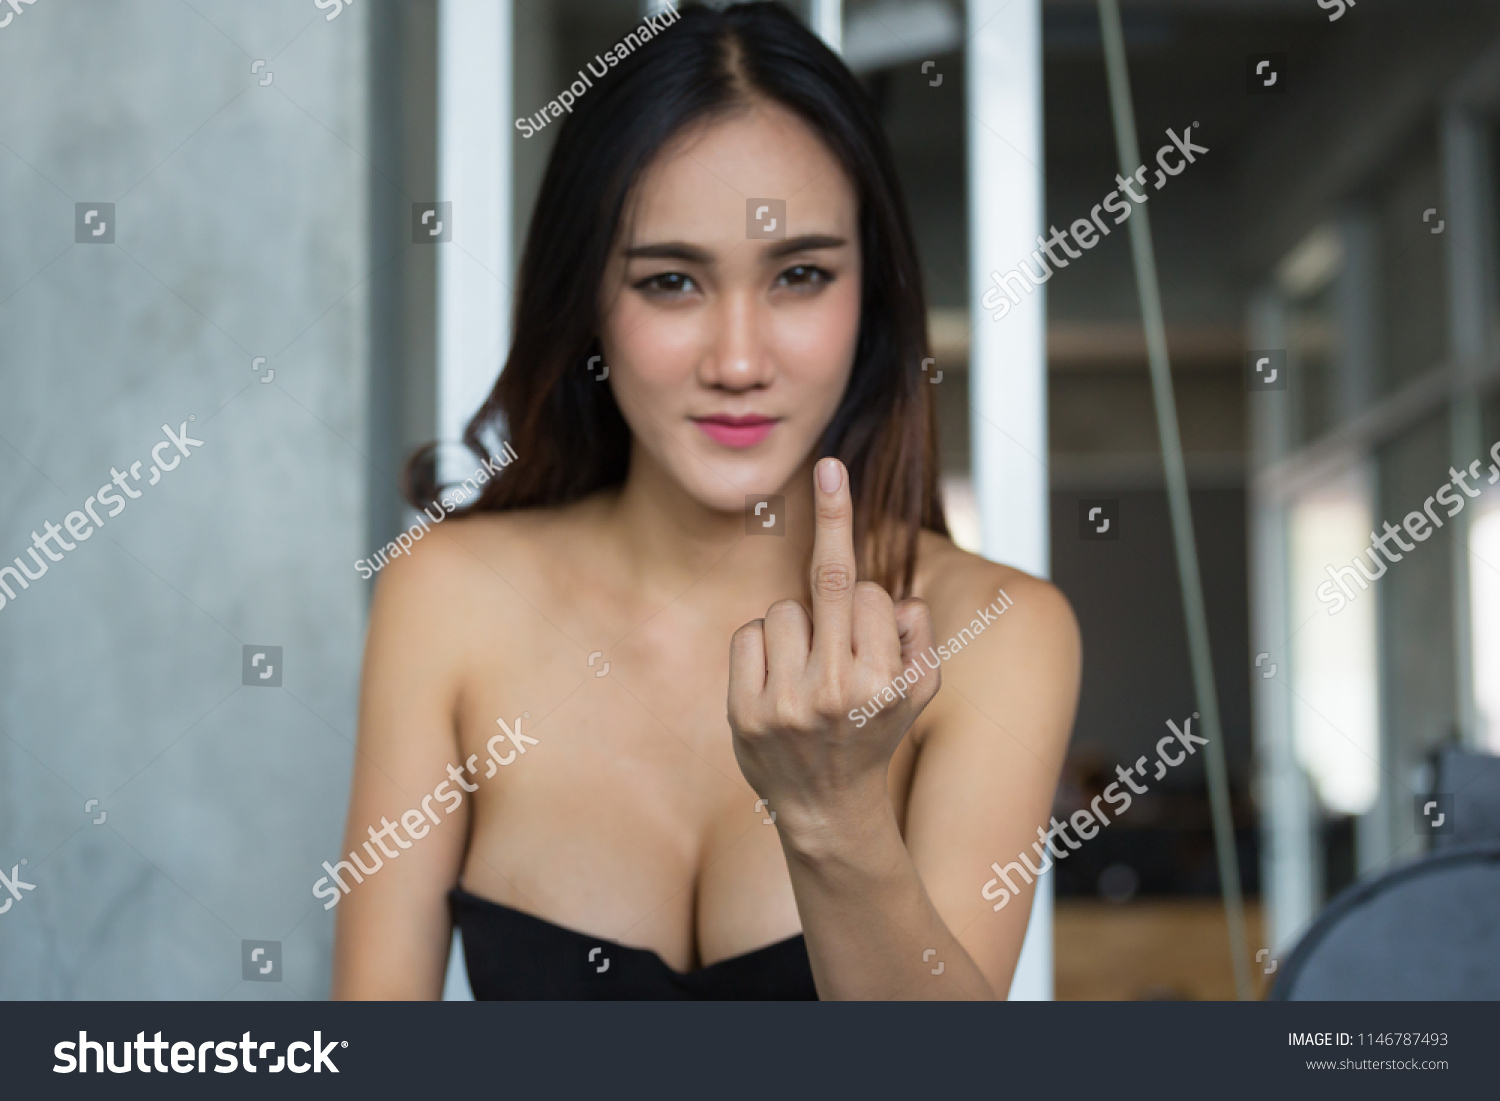 Young girl boobs